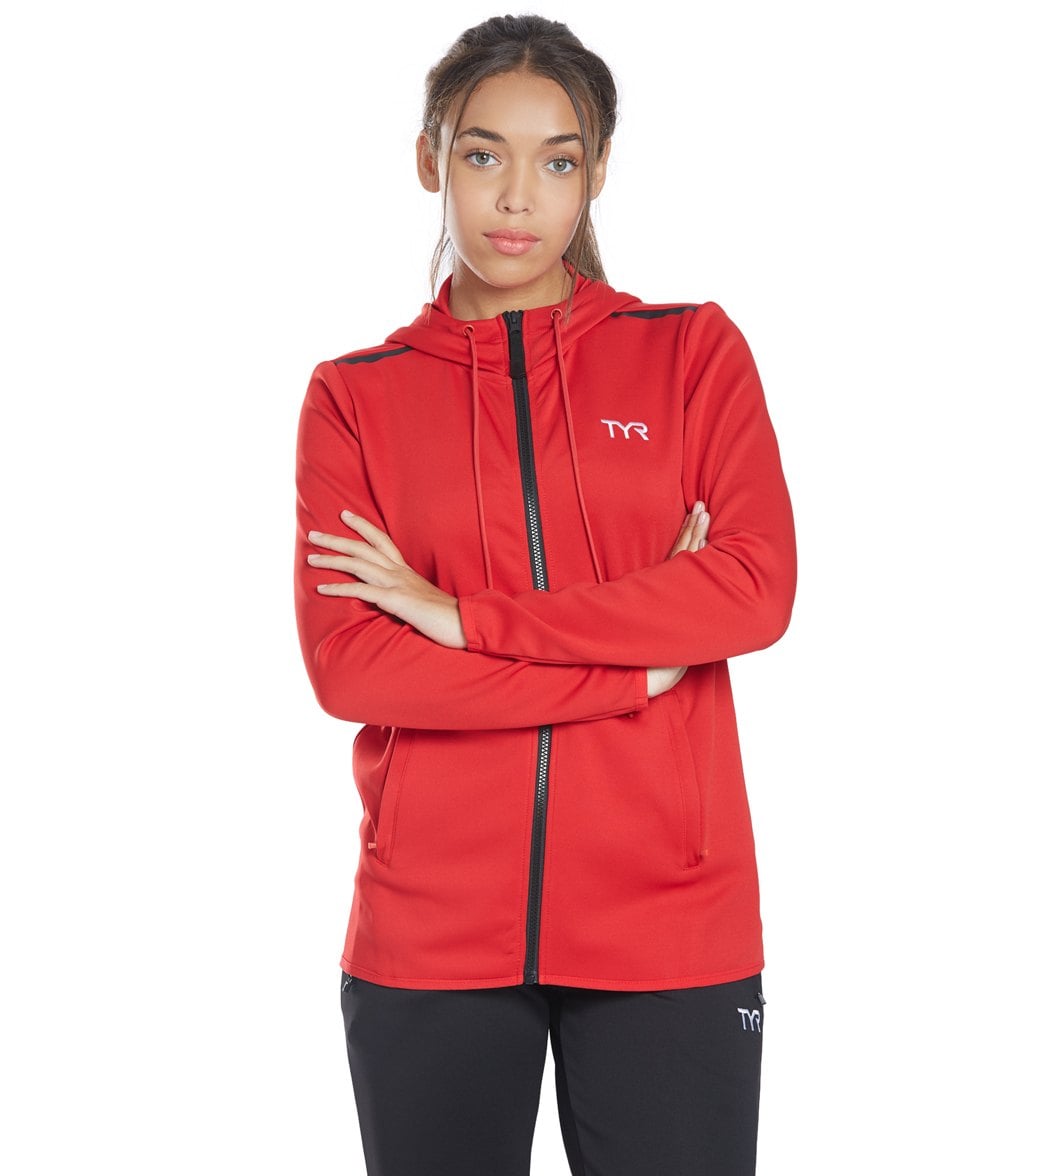 TYR Women's Team Full Zip Hoodie - Red Medium Size Medium Polyester - Swimoutlet.com